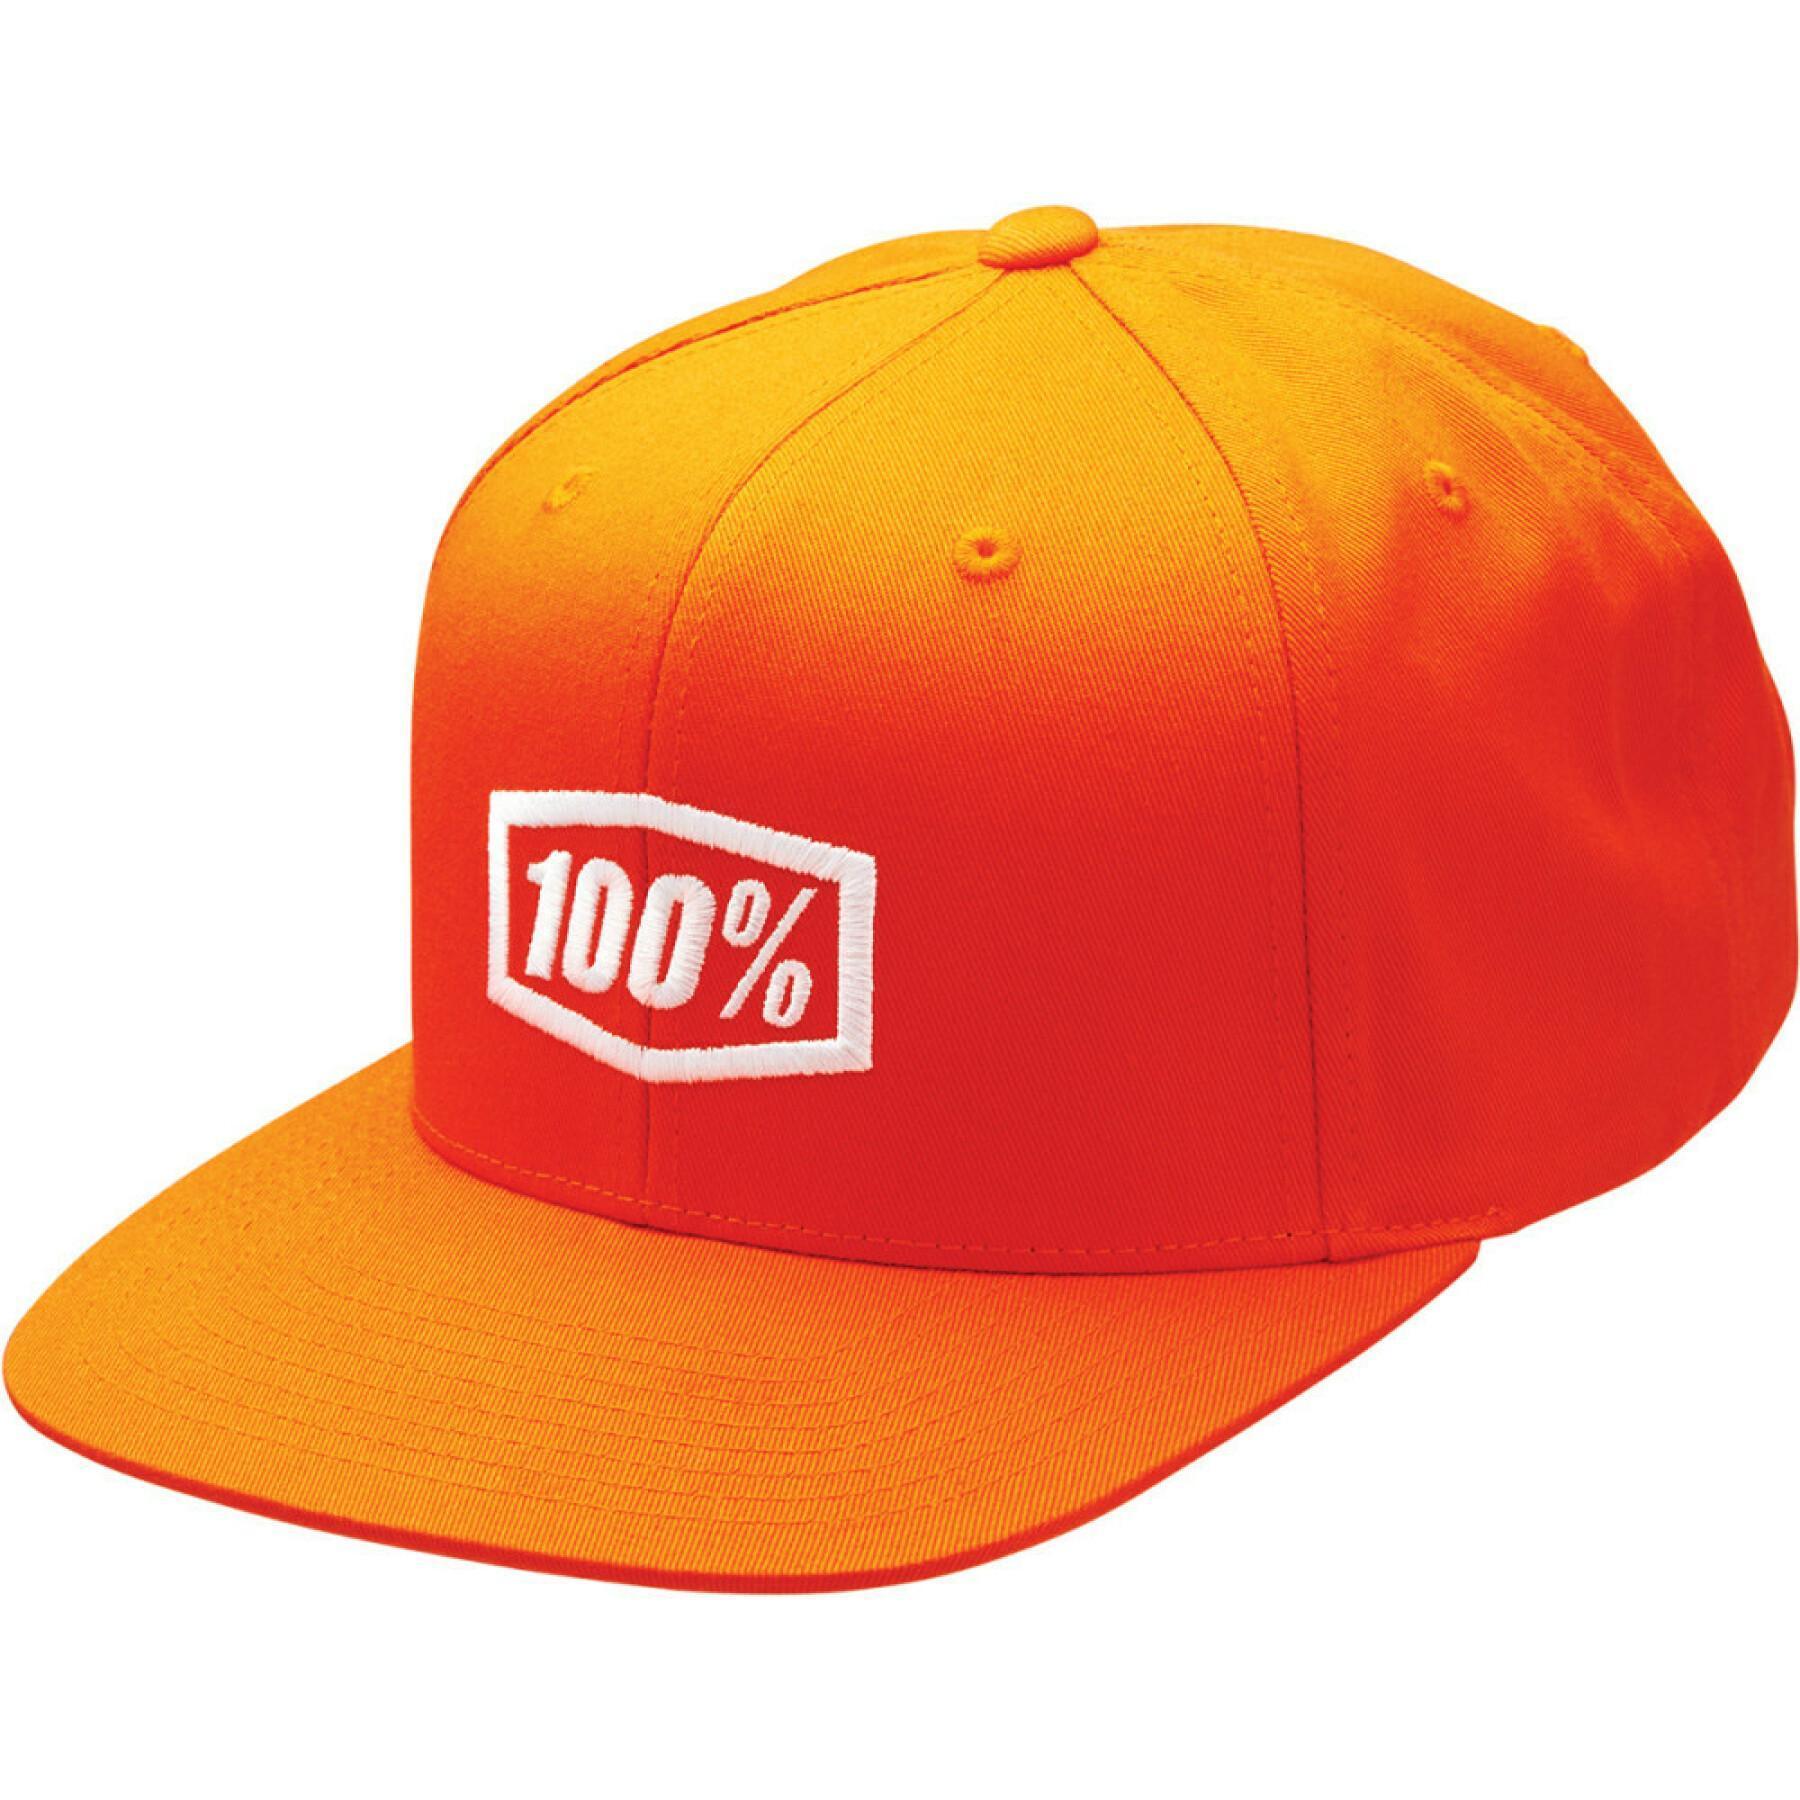 Children's cap 100% icon snapback lyp fit